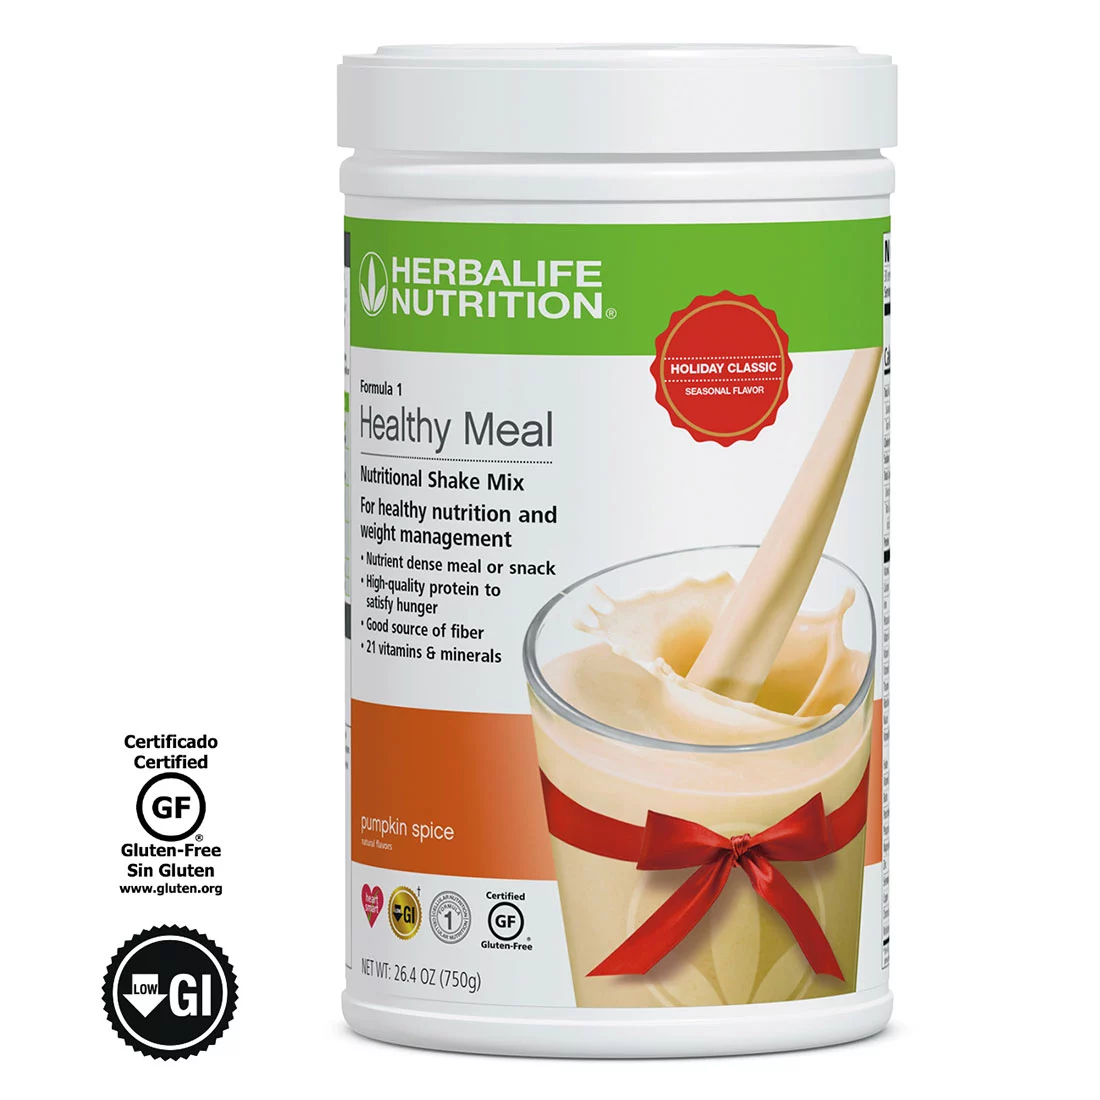 formula 1 healthy meal nutritional shake mix : pumpkin spice